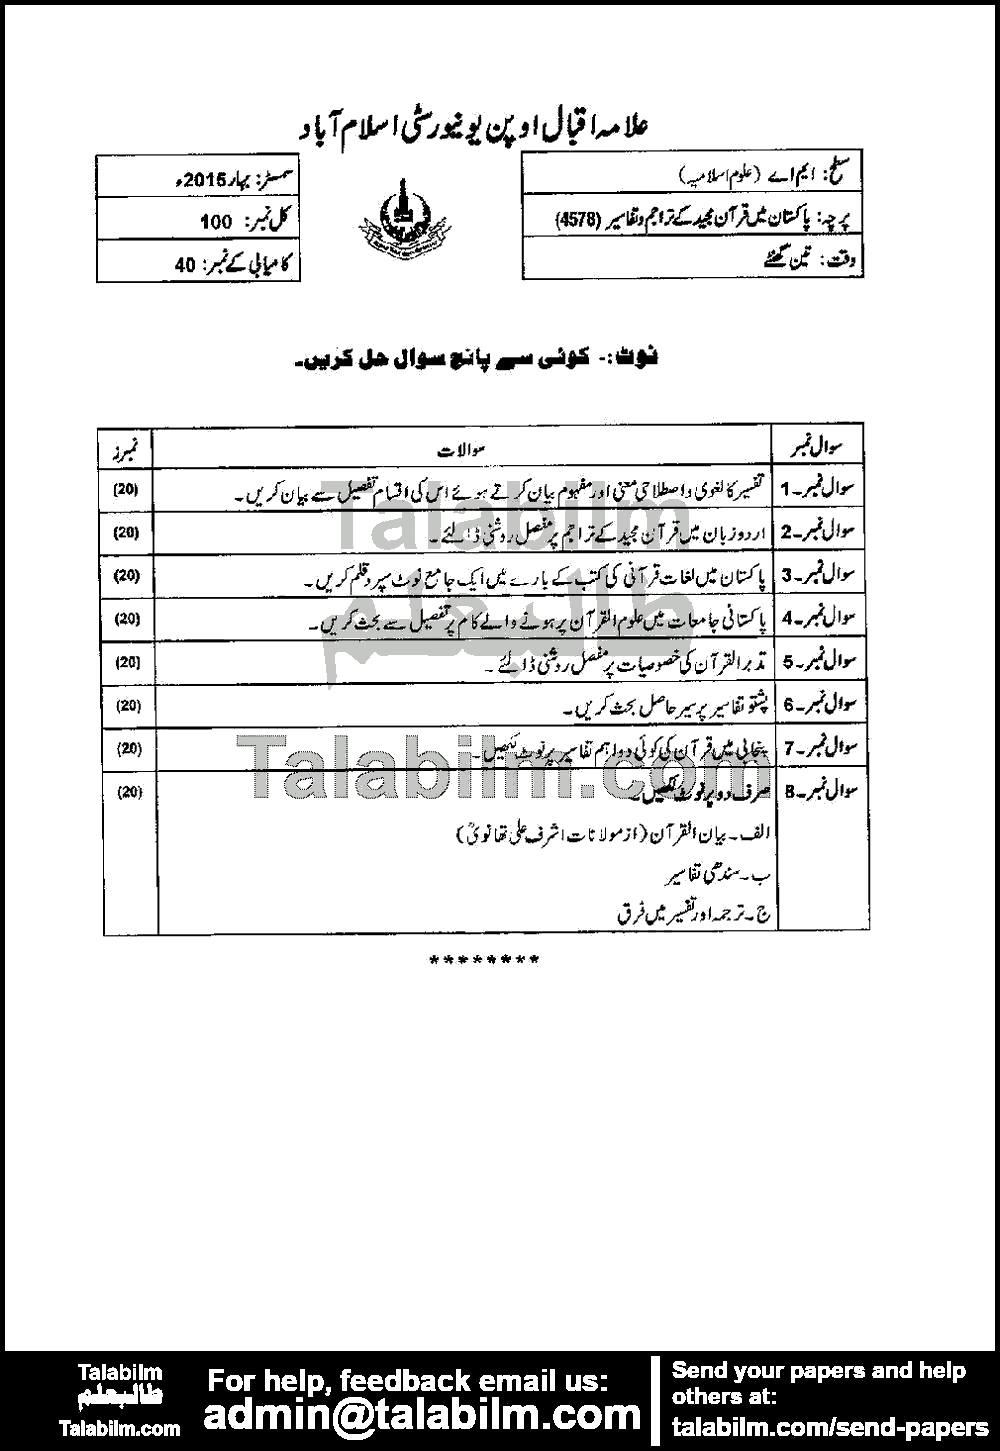 Pakistan Mai Quran Hakeem Ky Motrajim 4578 past paper for Spring 2015